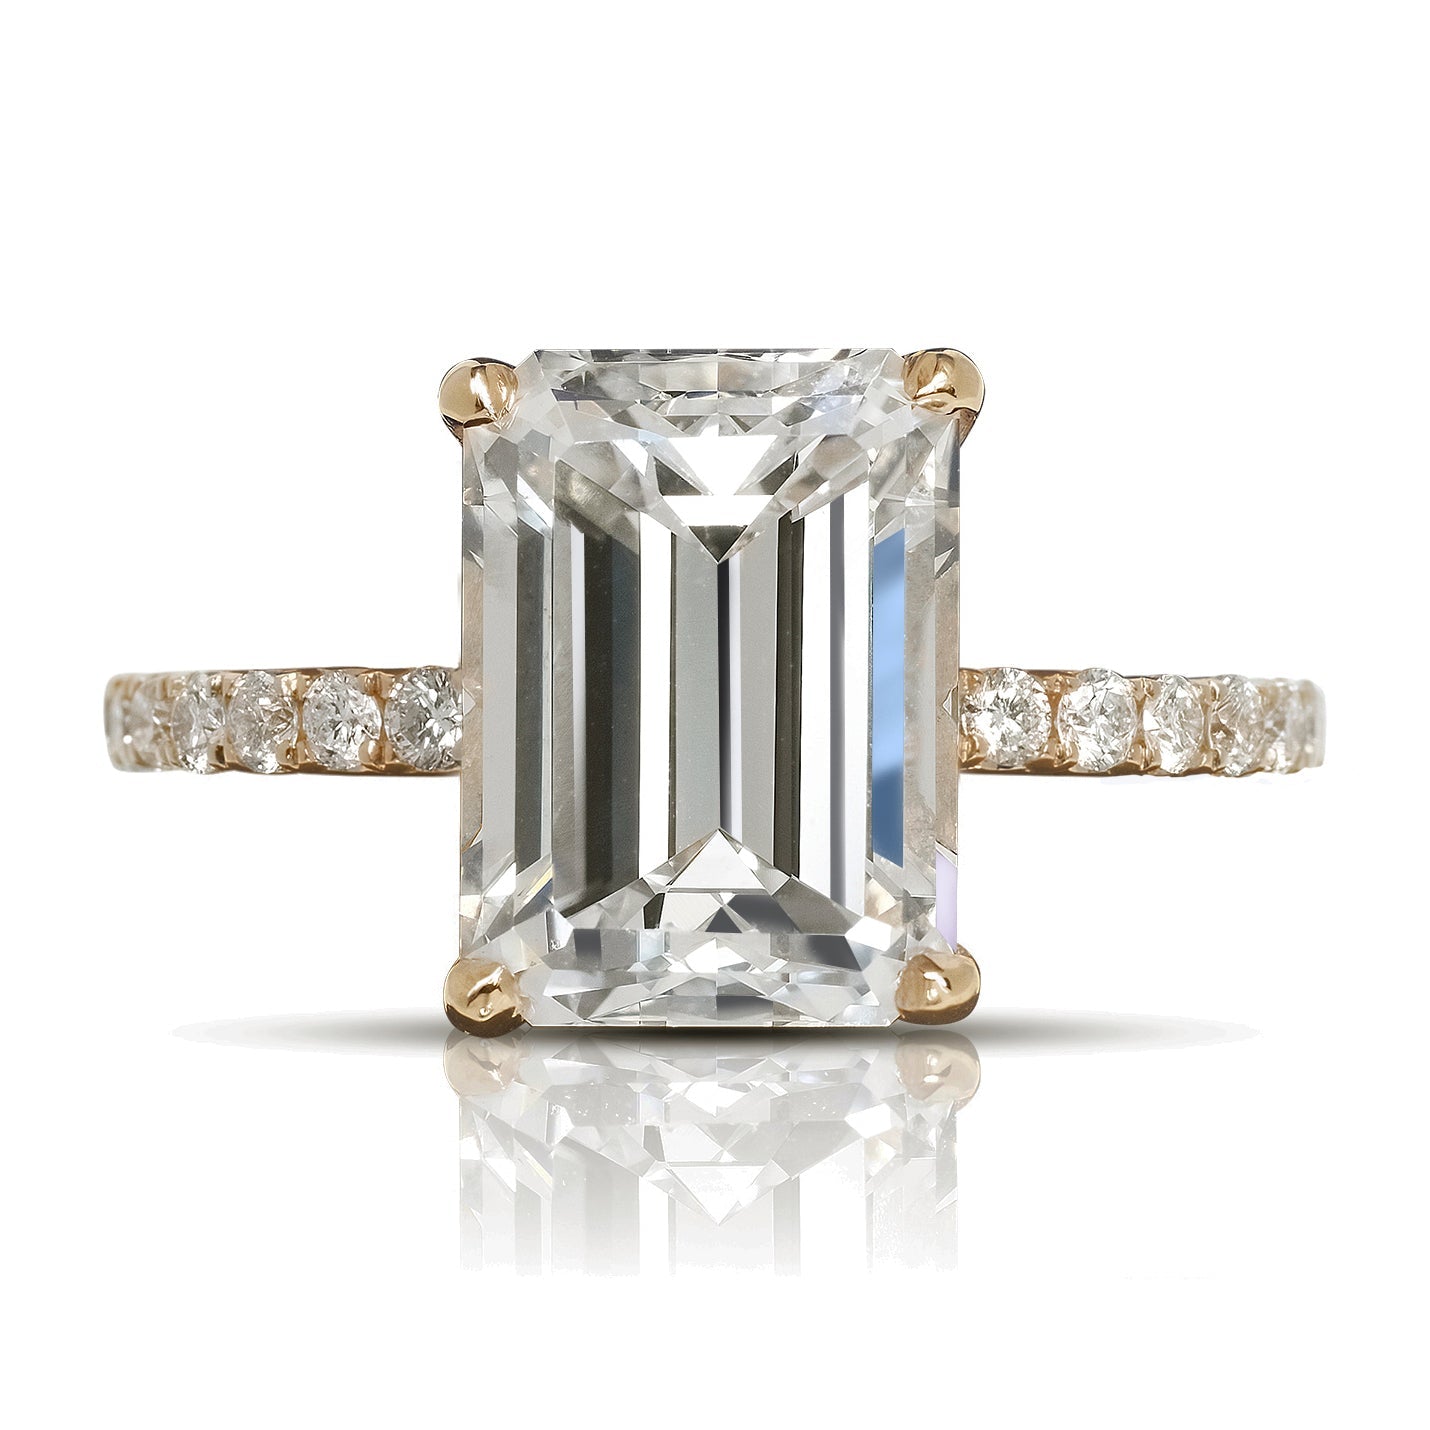 Diamond Ring Emerald Cut 4 Carat Sidestone Ring in 18k Rose Gold Front View